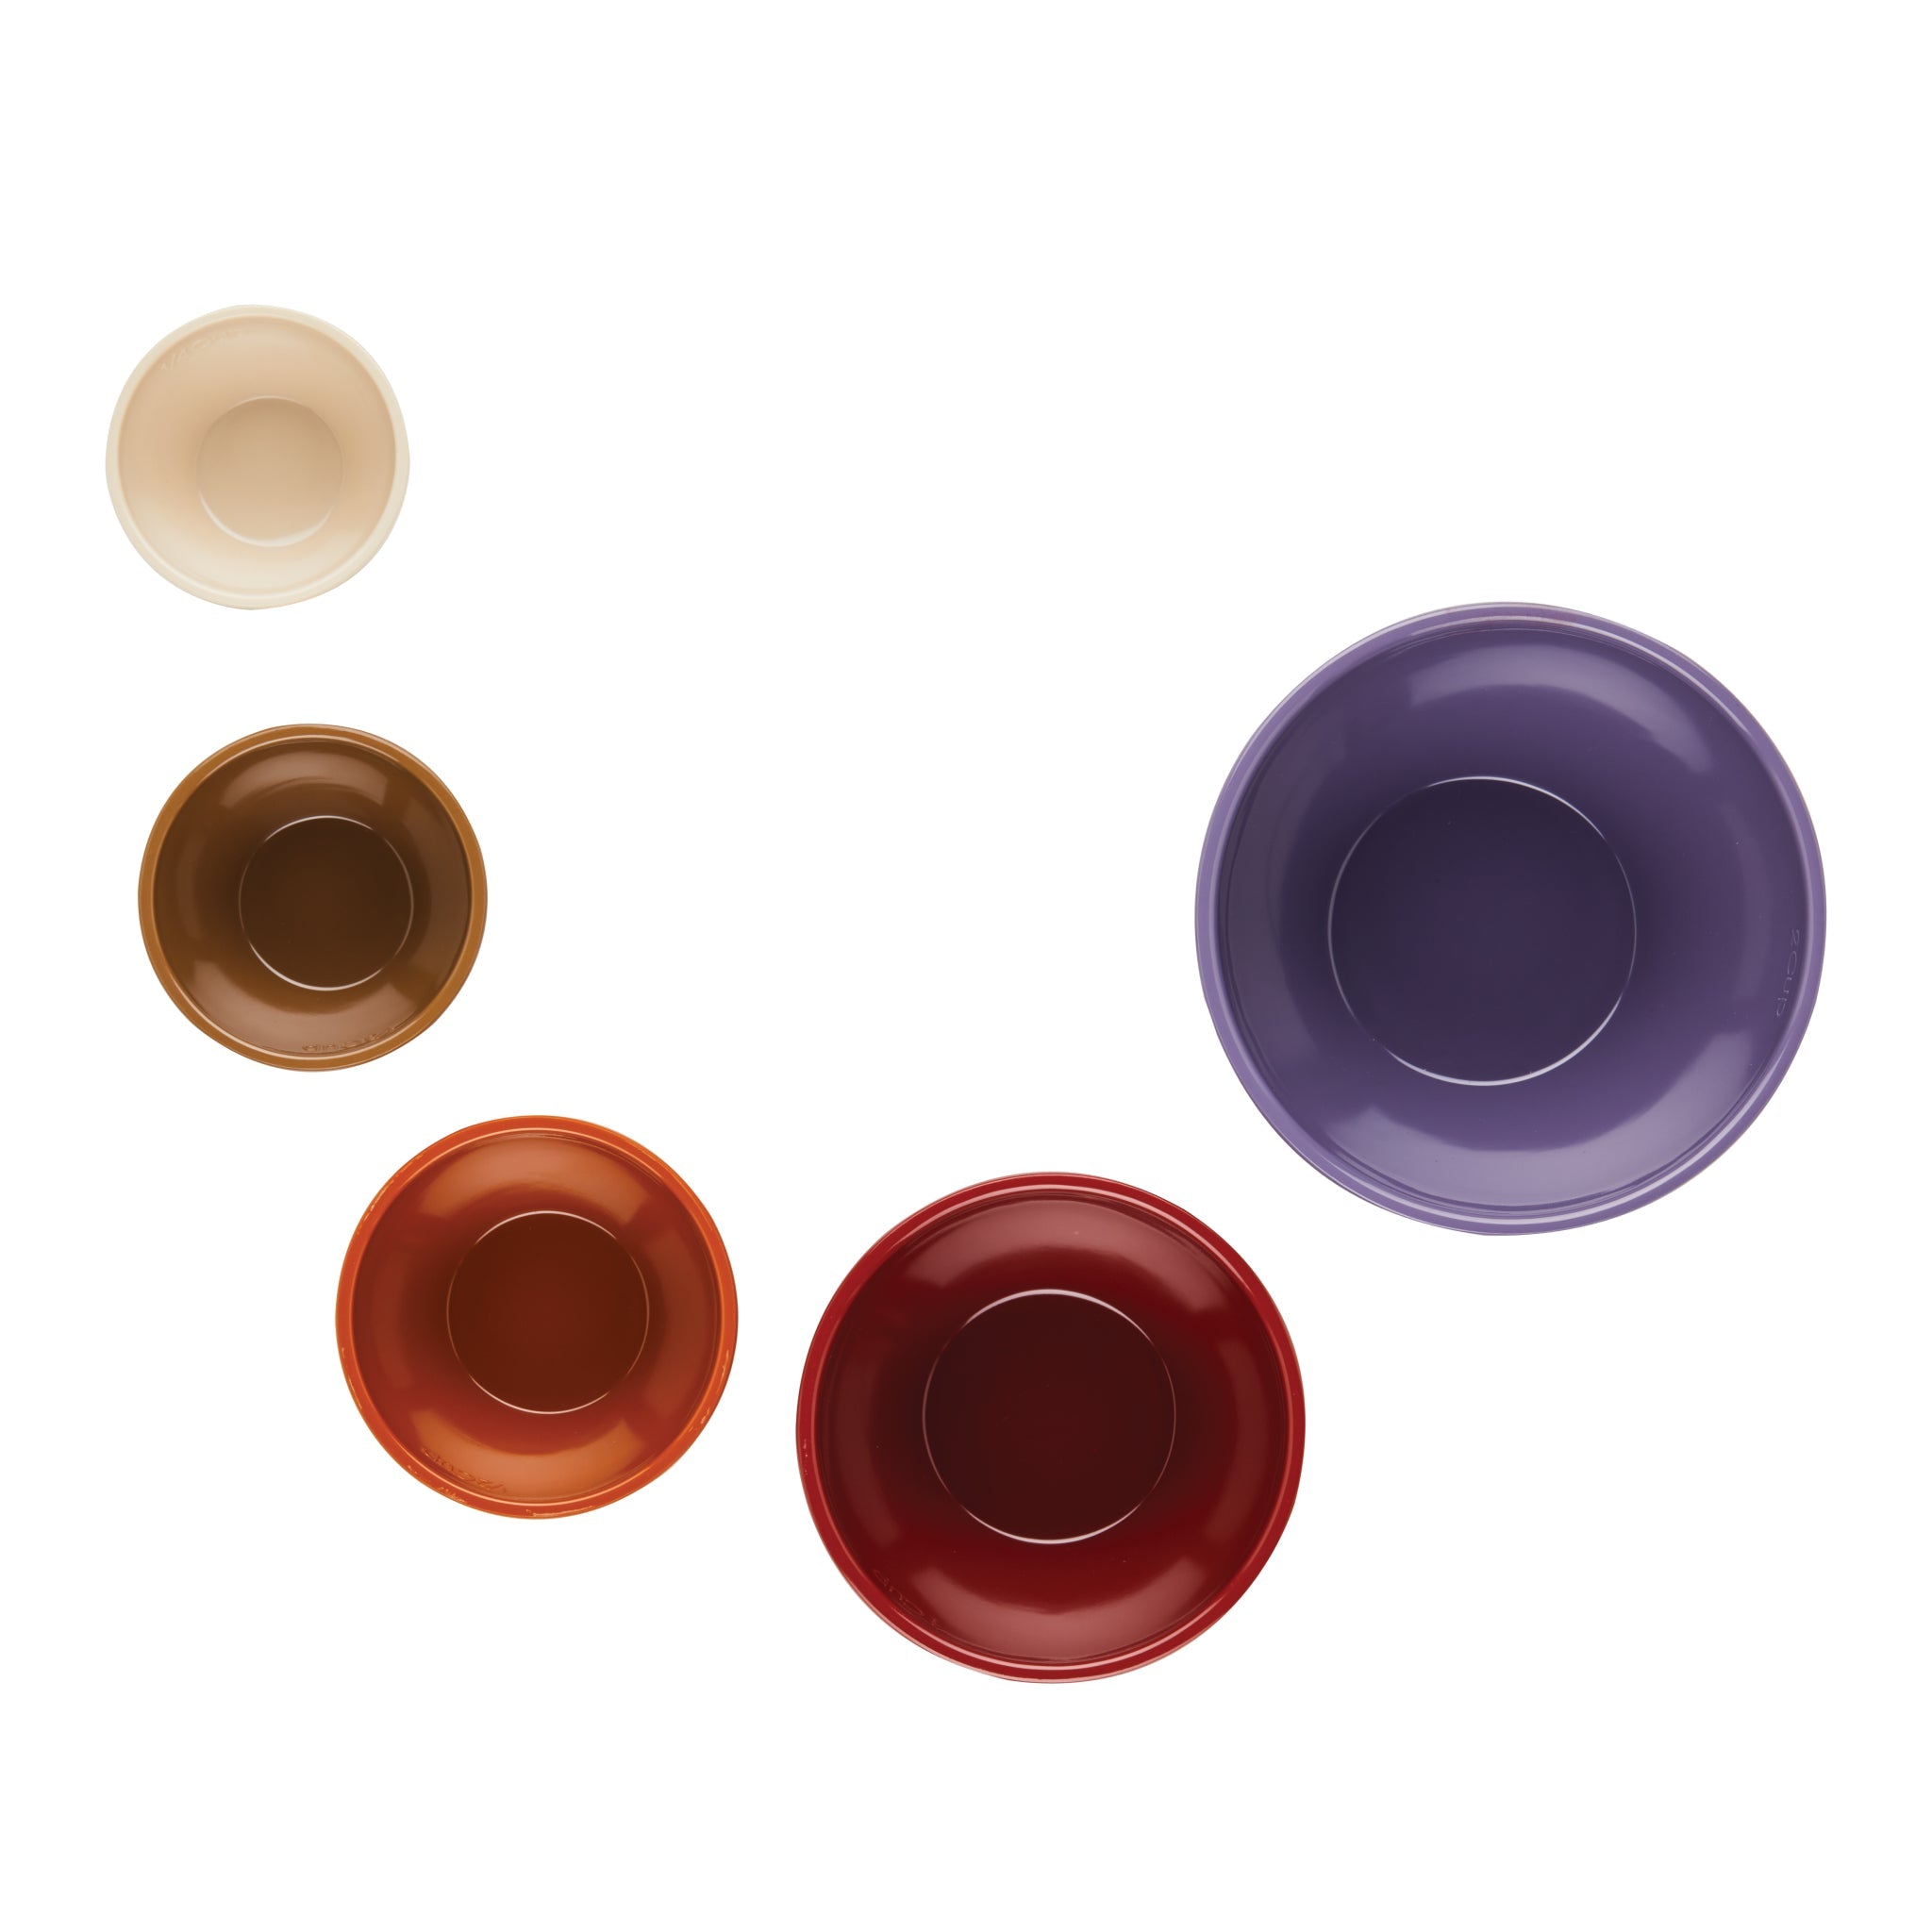 Tramontina Ceramic 14-Pc. Cookware Set, Purple